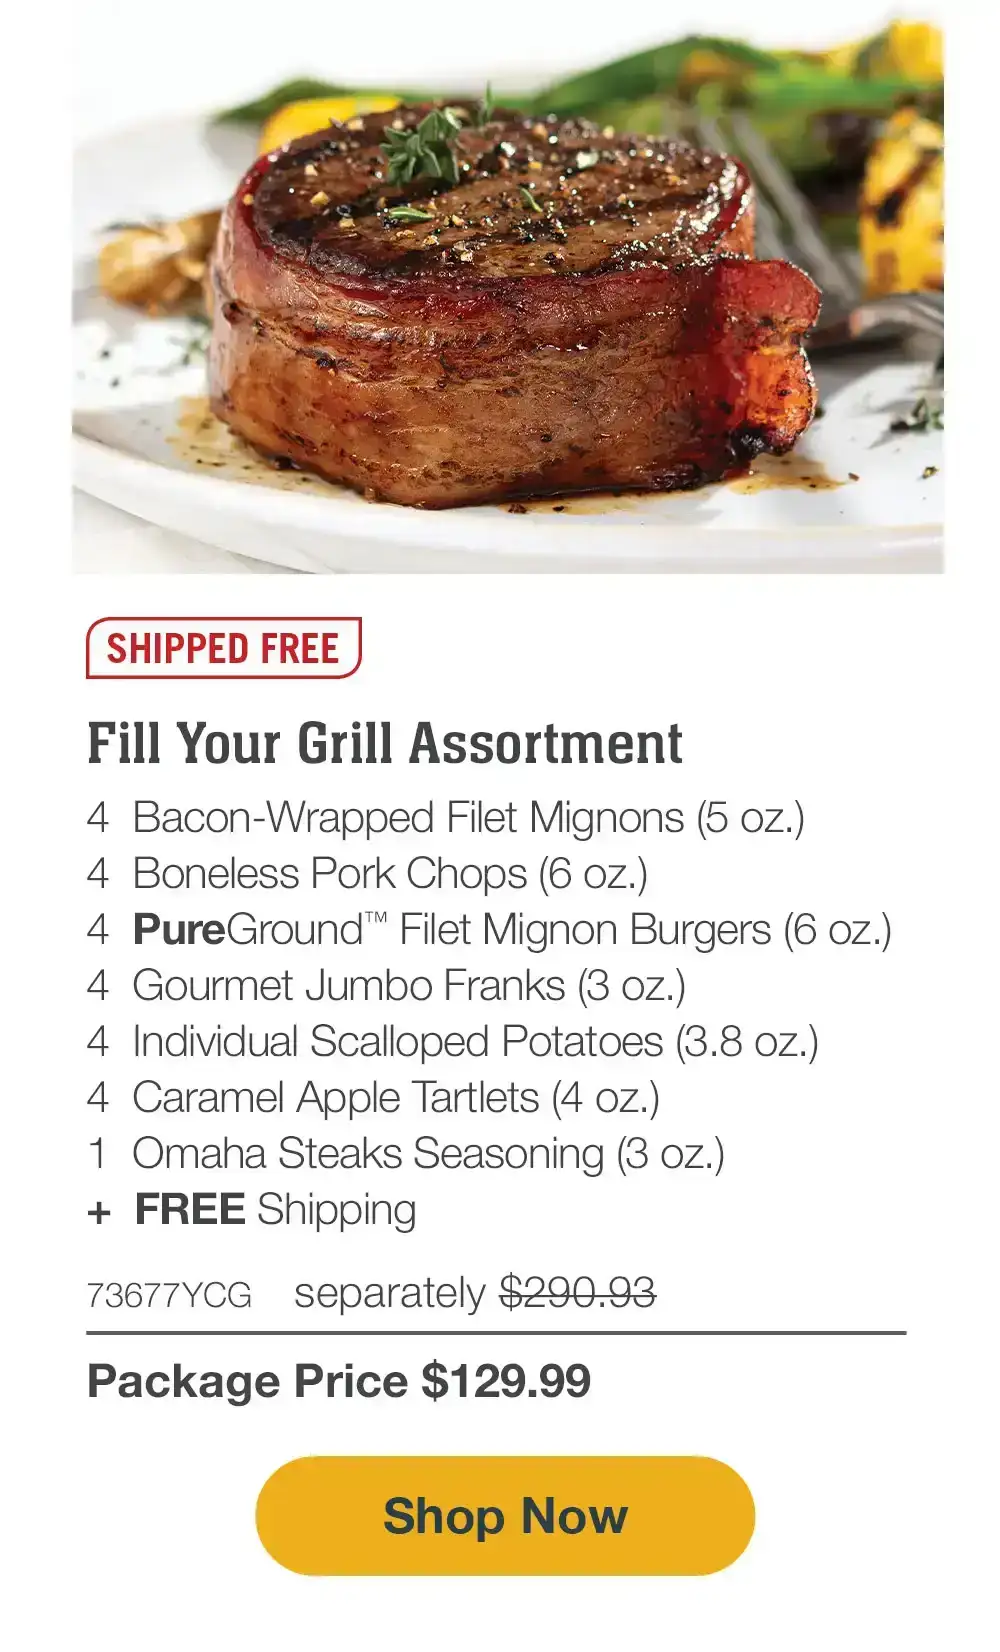 SHIPPED FREE | Grill Master’s Delight - 4 Butcher’s Cut Top Sirloins (6 oz.) - 4 Bacon-Wrapped Pork Chops (6 oz.) - 4 Omaha Steaks Burgers (6 oz.) - 4 Gourmet Jumbo Franks (3 oz.) - 4 Potatoes au Gratin (2.8 oz.) - 4 Caramel Apple Tartlets (4 oz.) - 1 Omaha Steaks Seasoning (3 oz.) - 73840YCG separately \\$273.93 | Package Price \\$129.99 || SHOP NOW